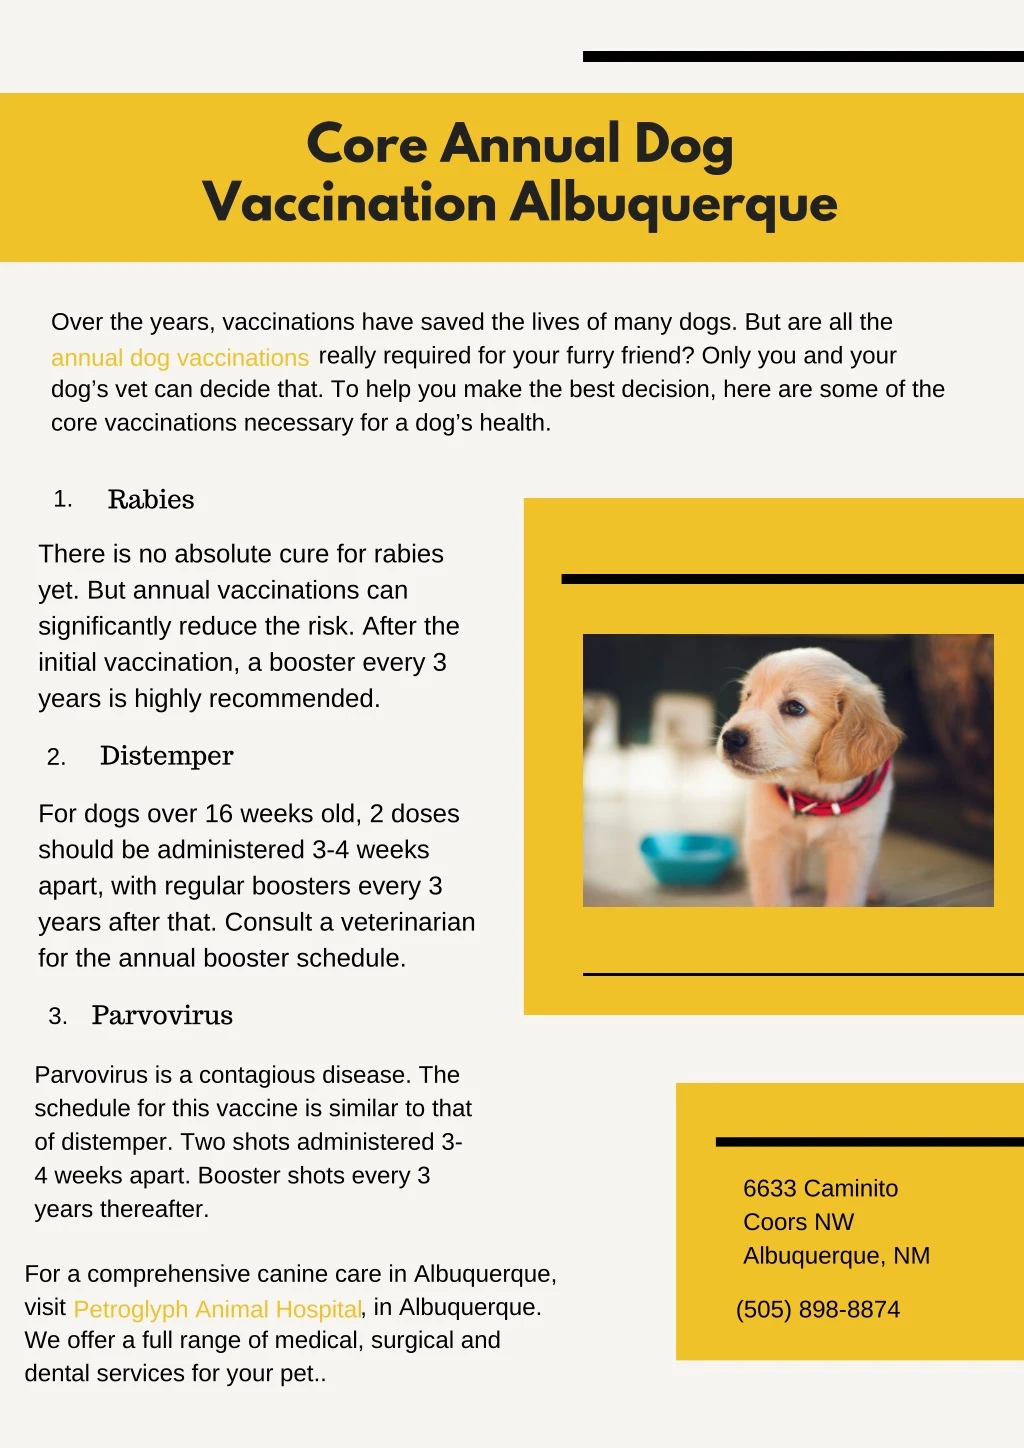 PPT Core Annual Dog Vaccination Albuquerque PowerPoint Presentation